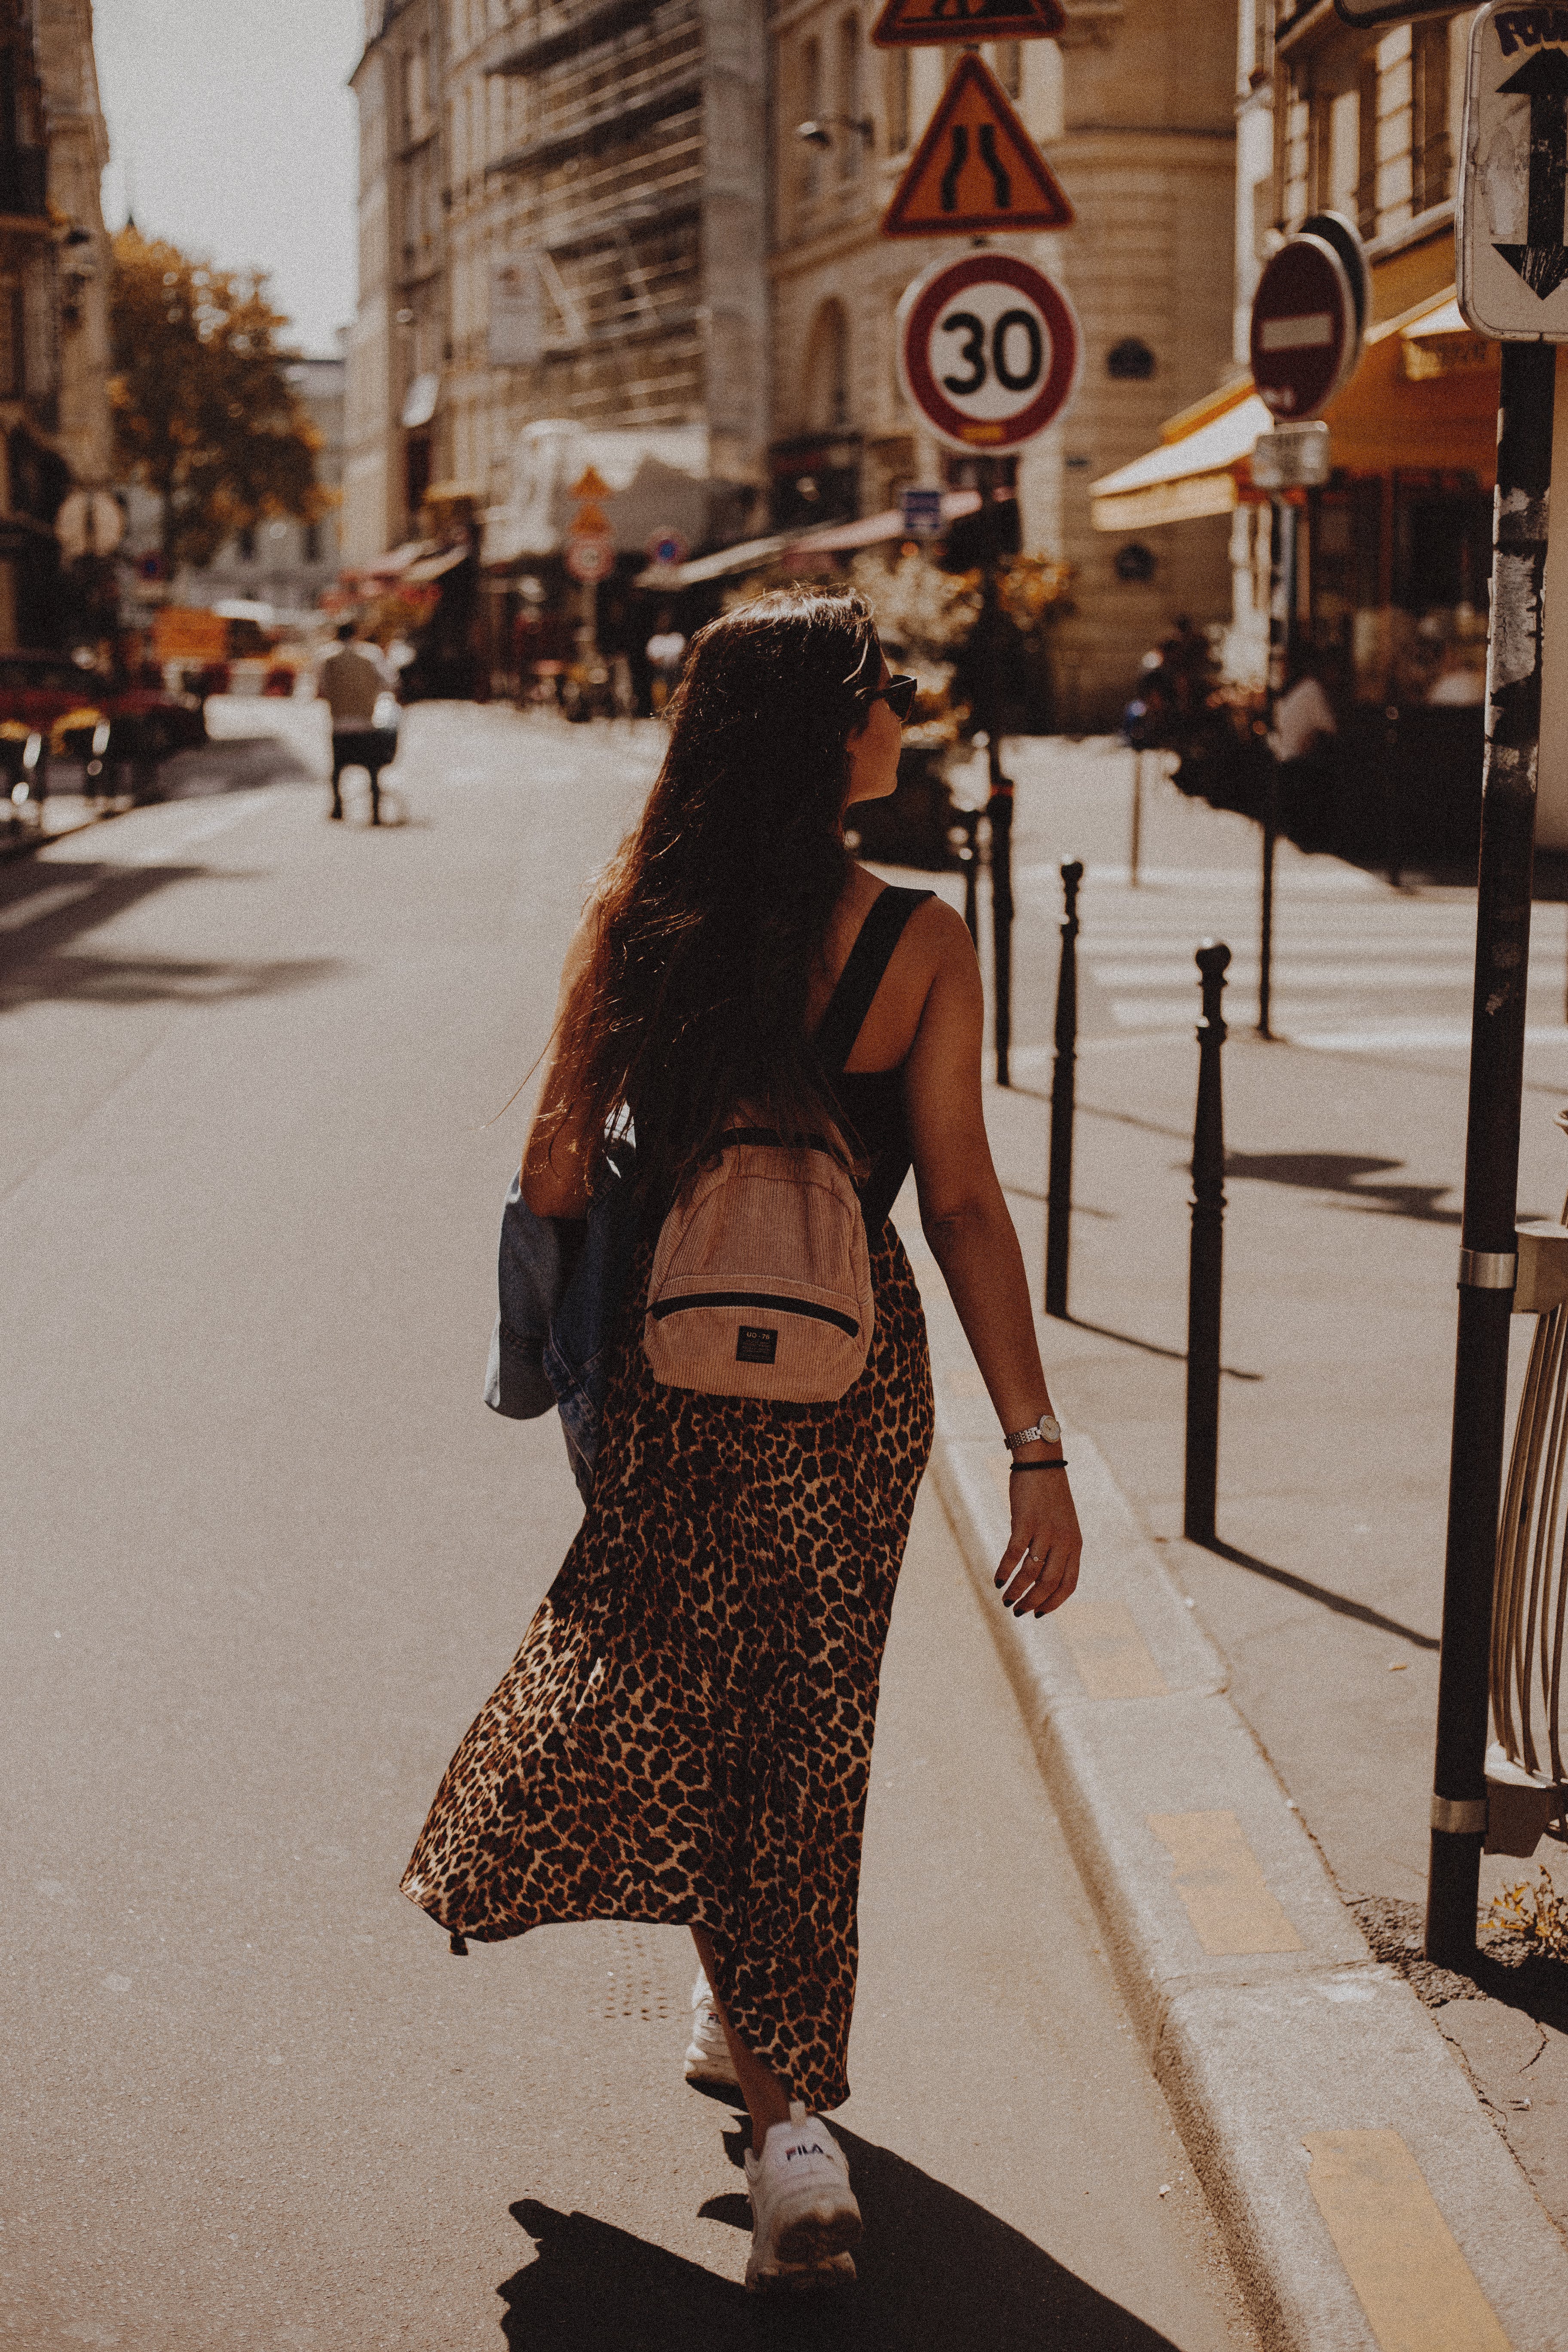 Woman walking on street | Source: Pexels